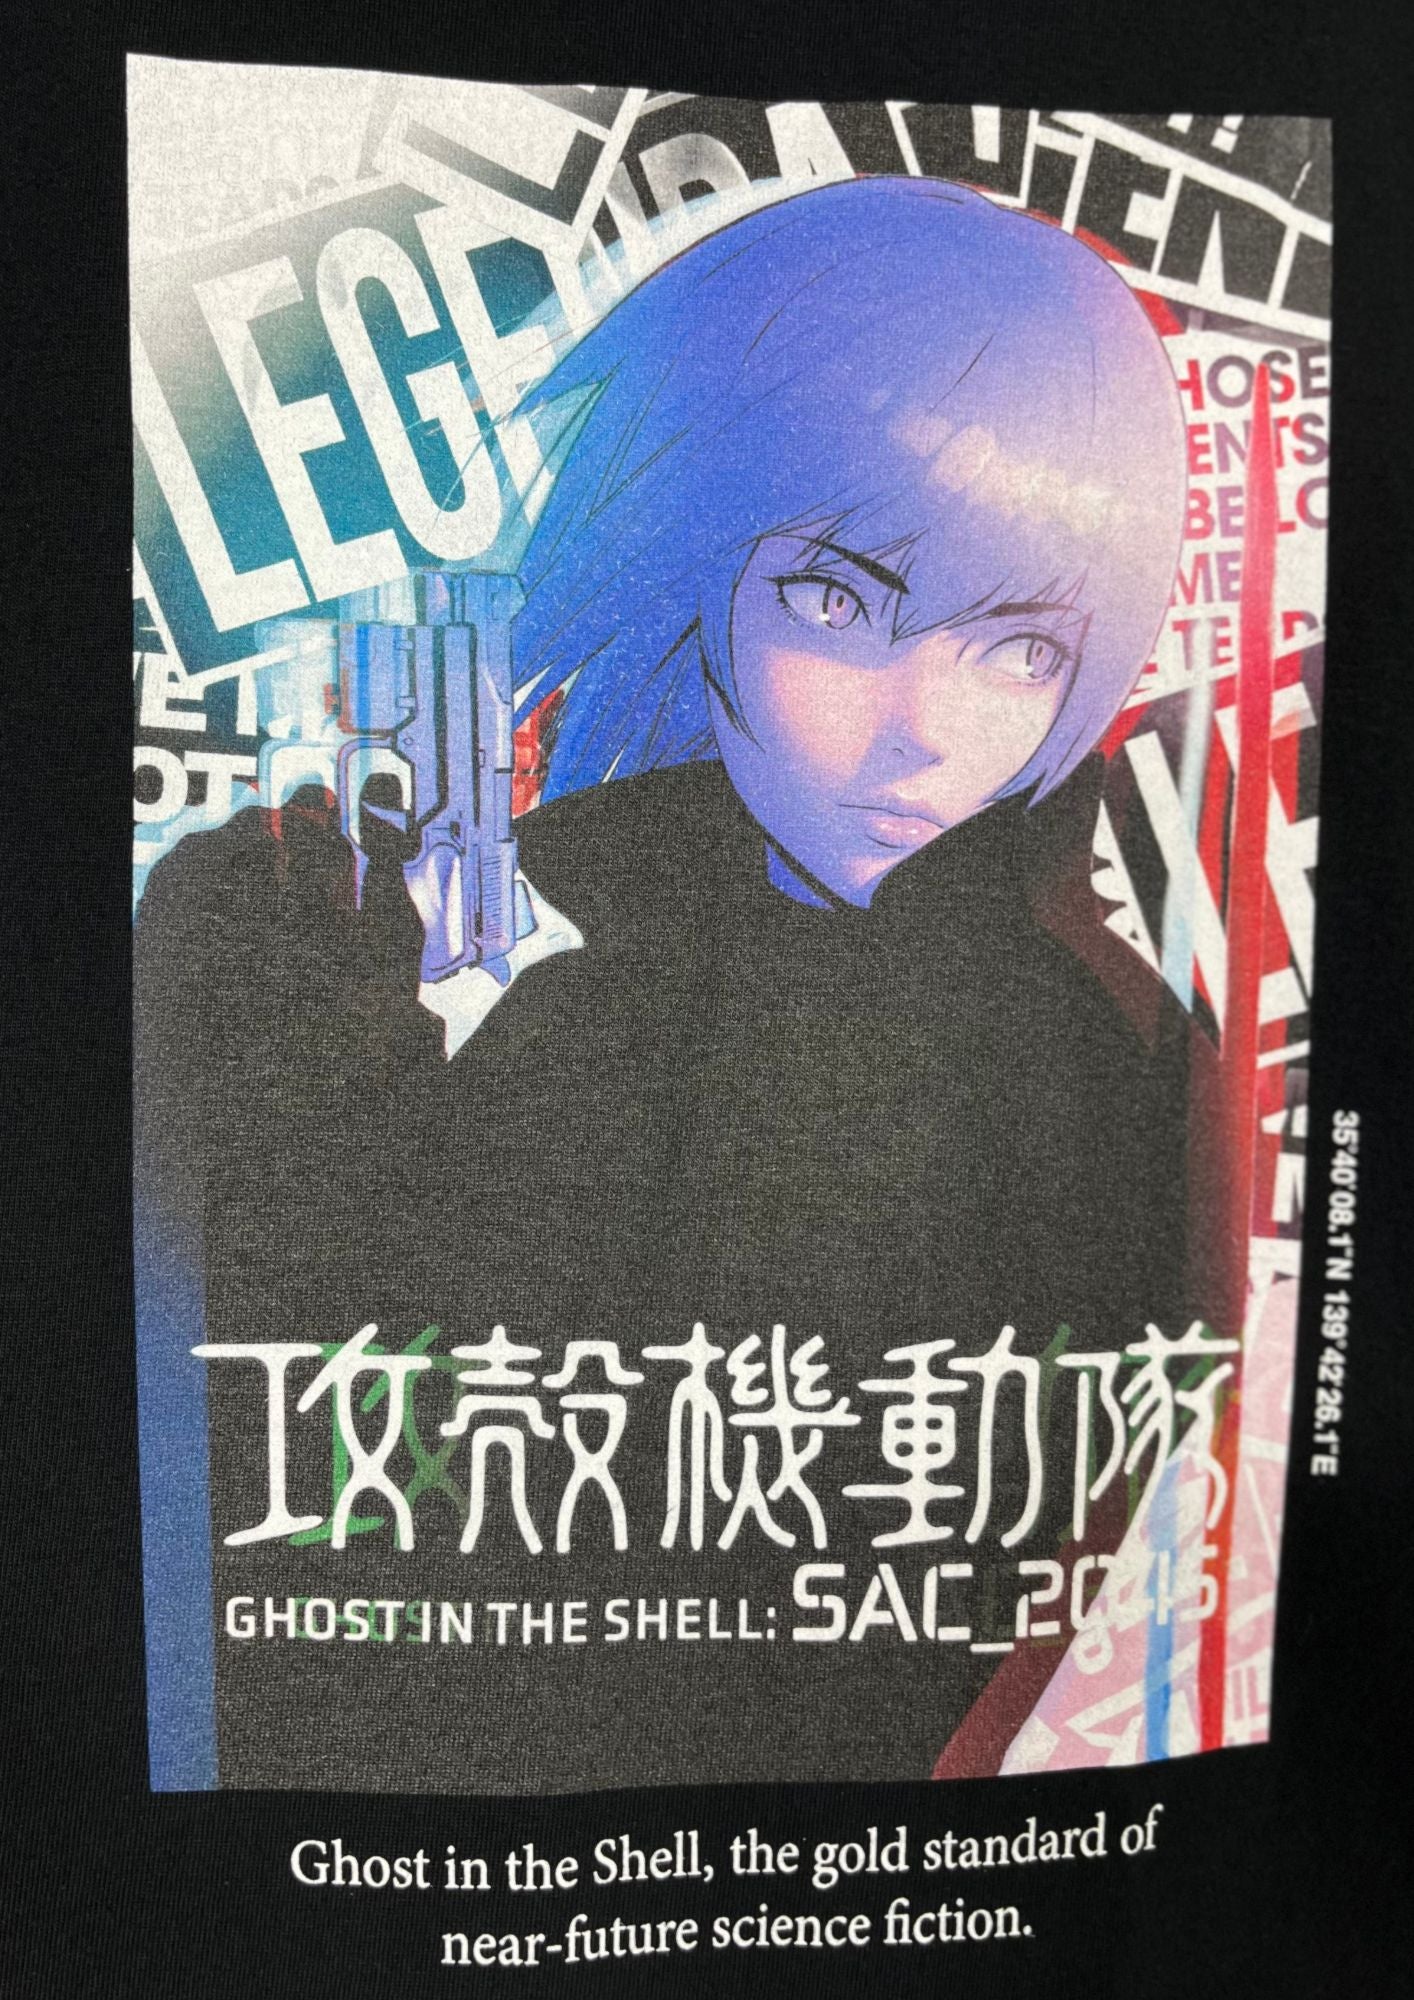 LEGENDA x Ghost in the Shell SAC_2045 T-shirt